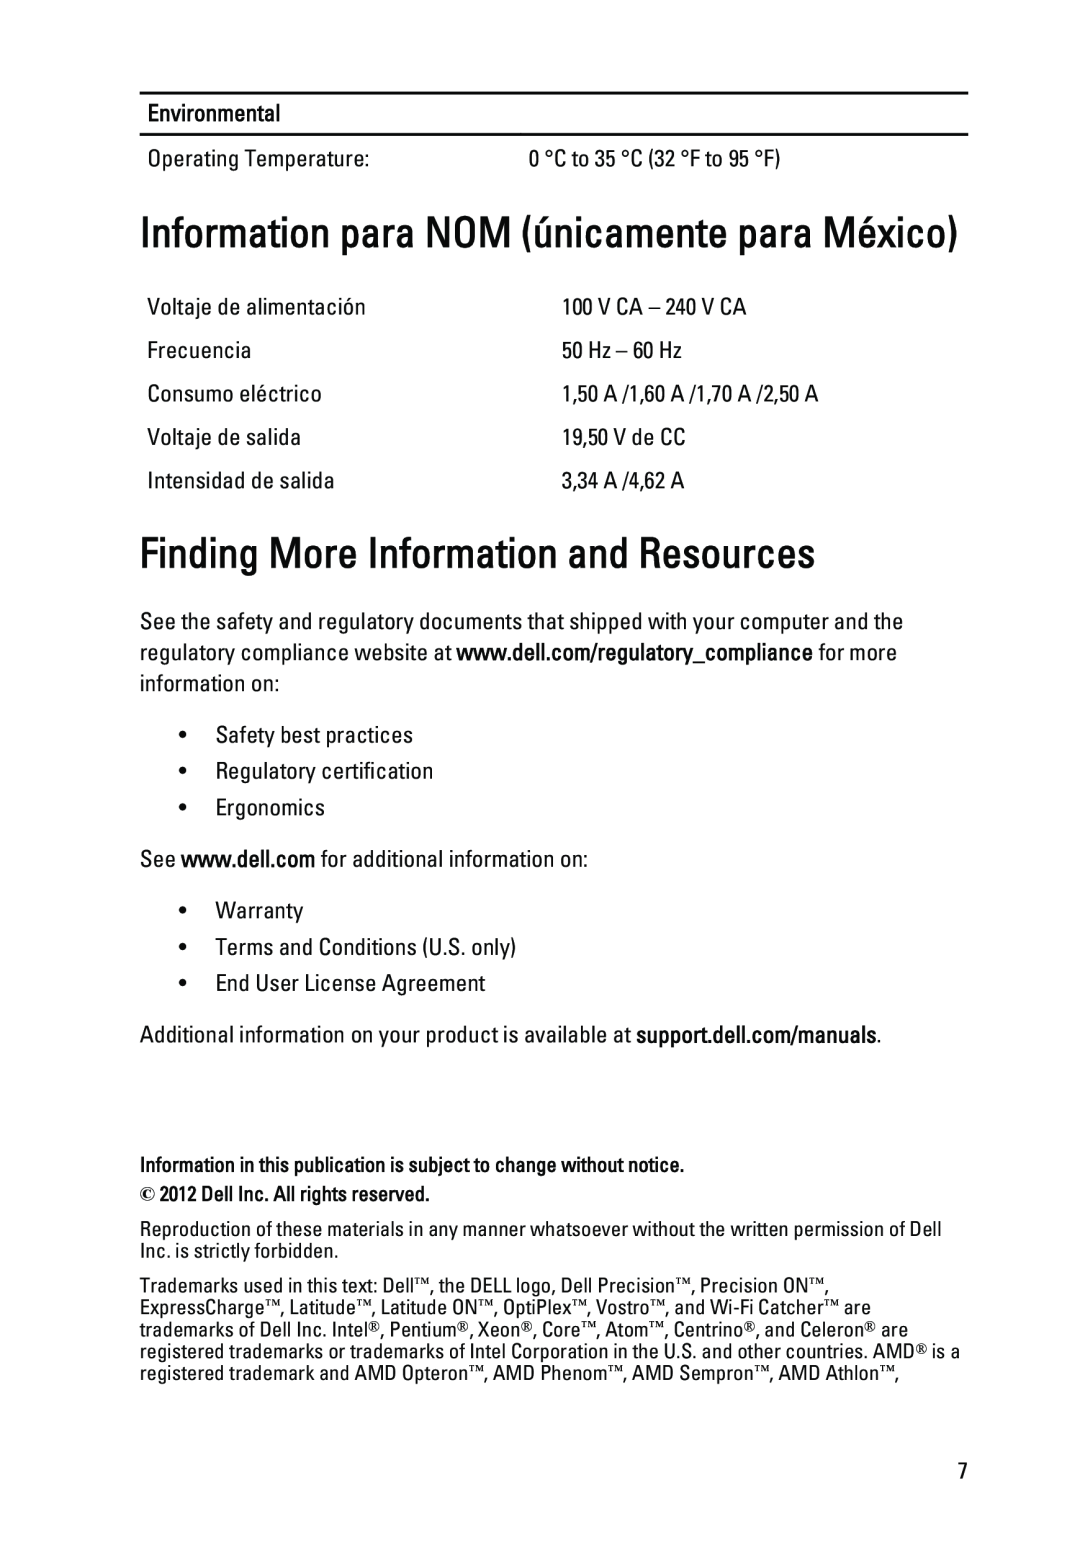 Dell 3460, 3560 manual Information para NOM únicamente para México, Finding More Information and Resources, Environmental 